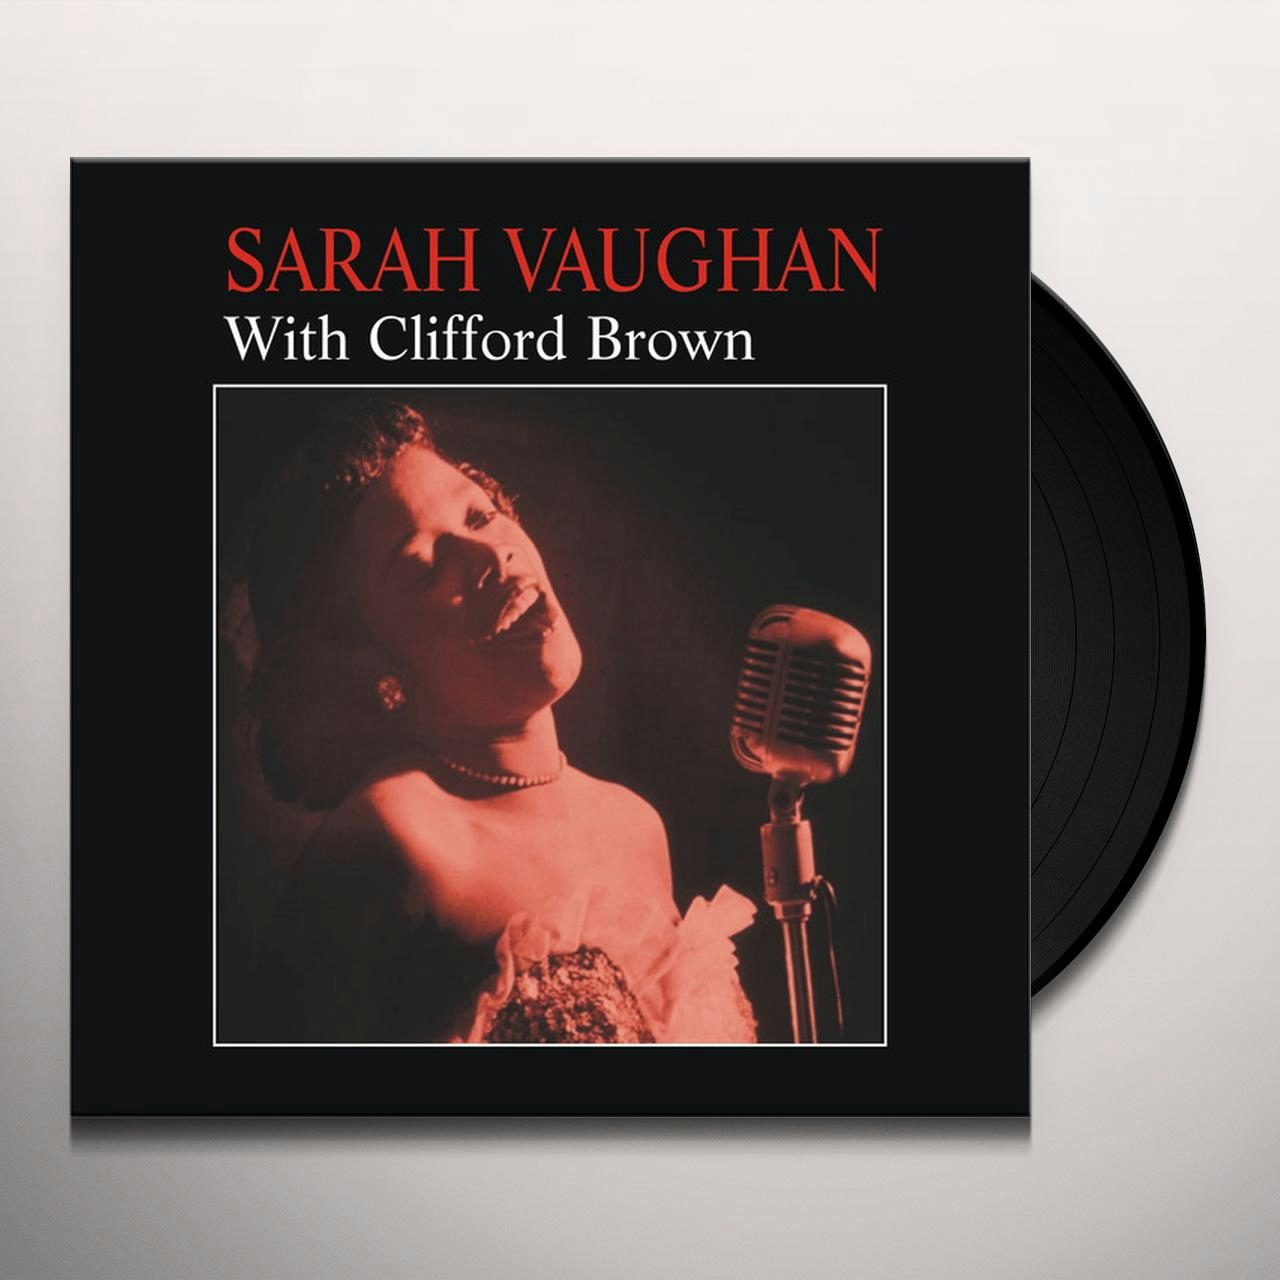 Sarah Vaughan WITH CLIFFORD BROWN (BONUS TRACK) Vinyl Record - 180